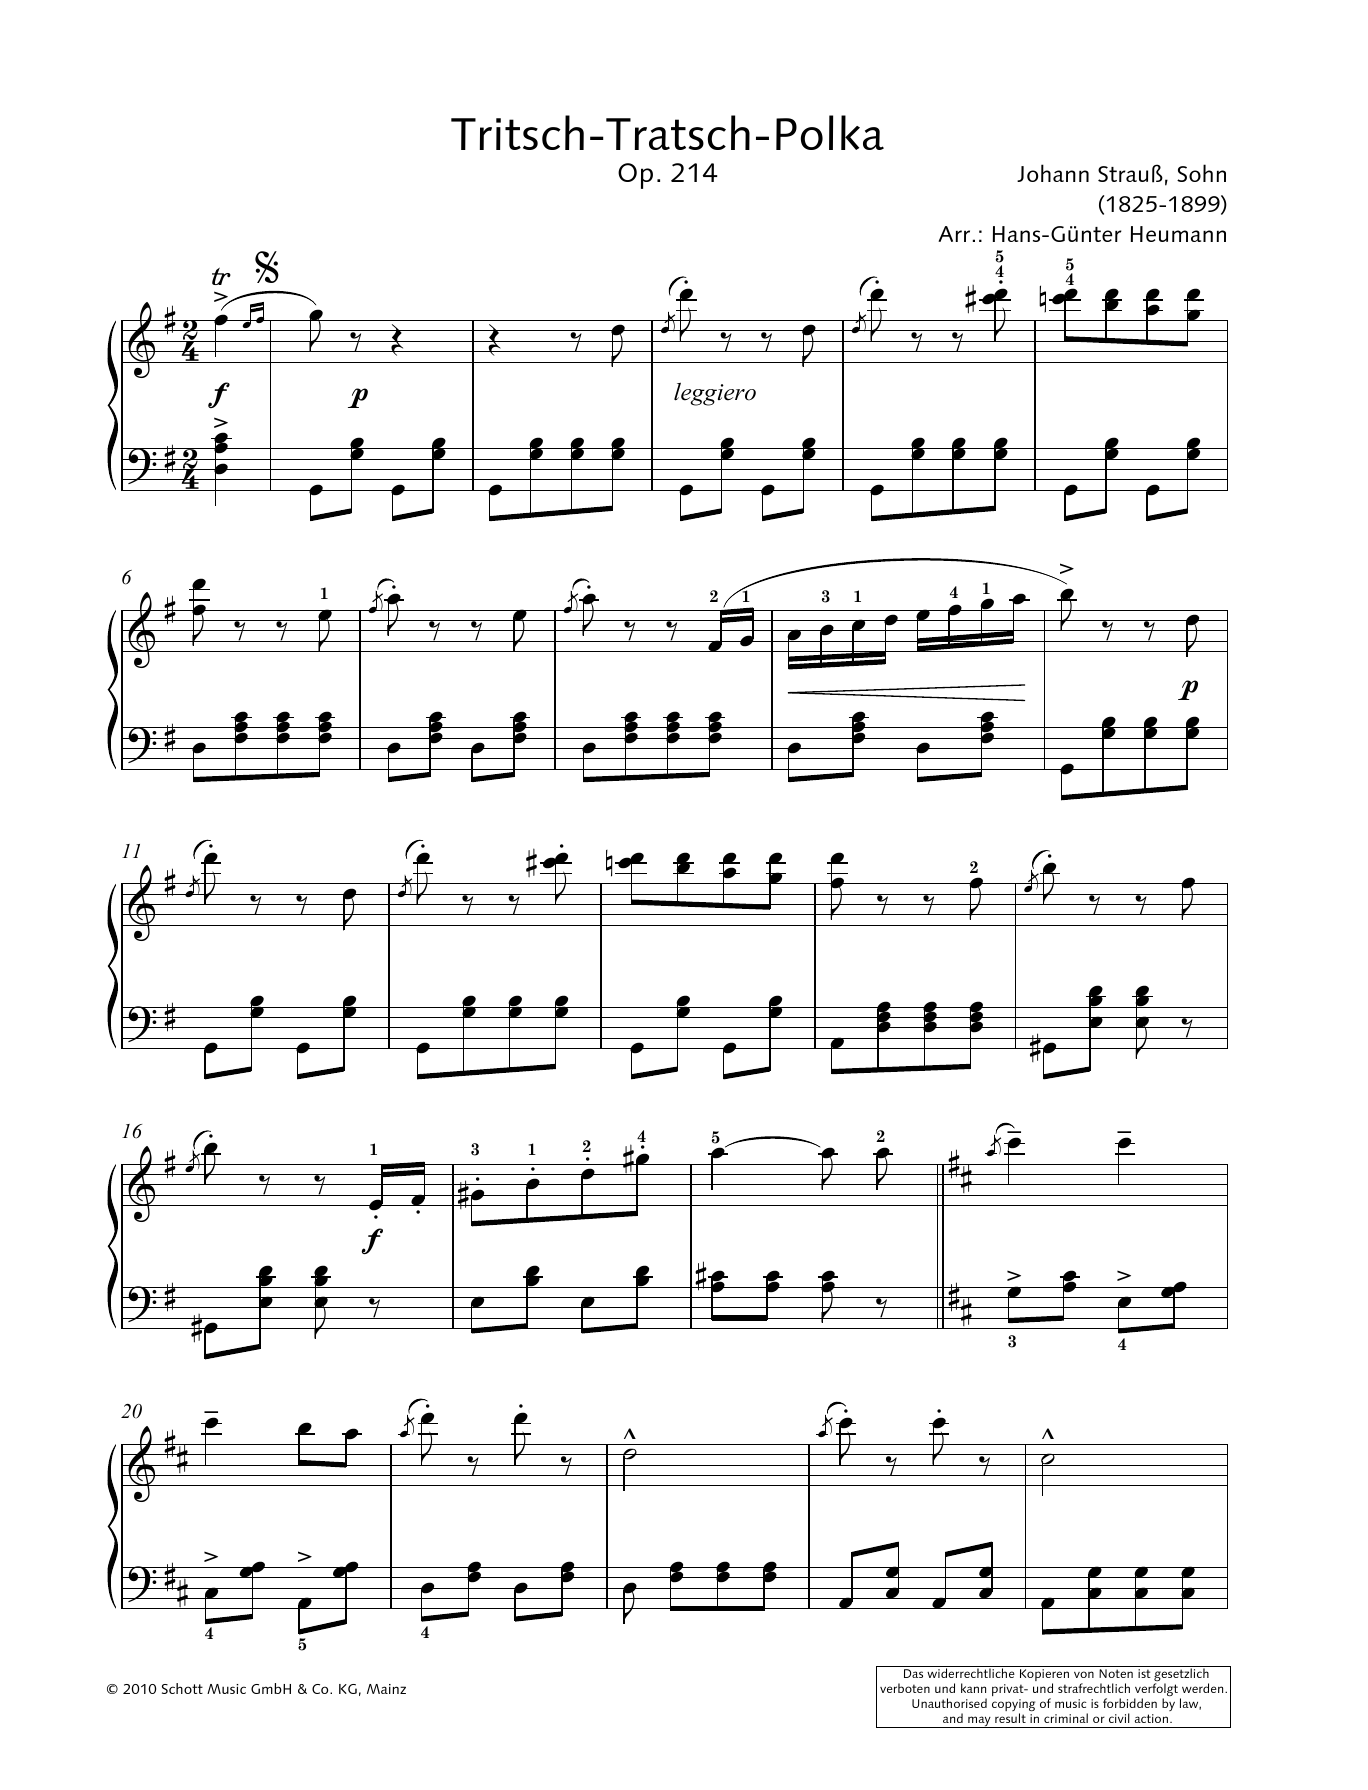 Hans-Gunter Heumann Tritsch-Tratsch-Polka Sheet Music Notes & Chords for Piano Solo - Download or Print PDF